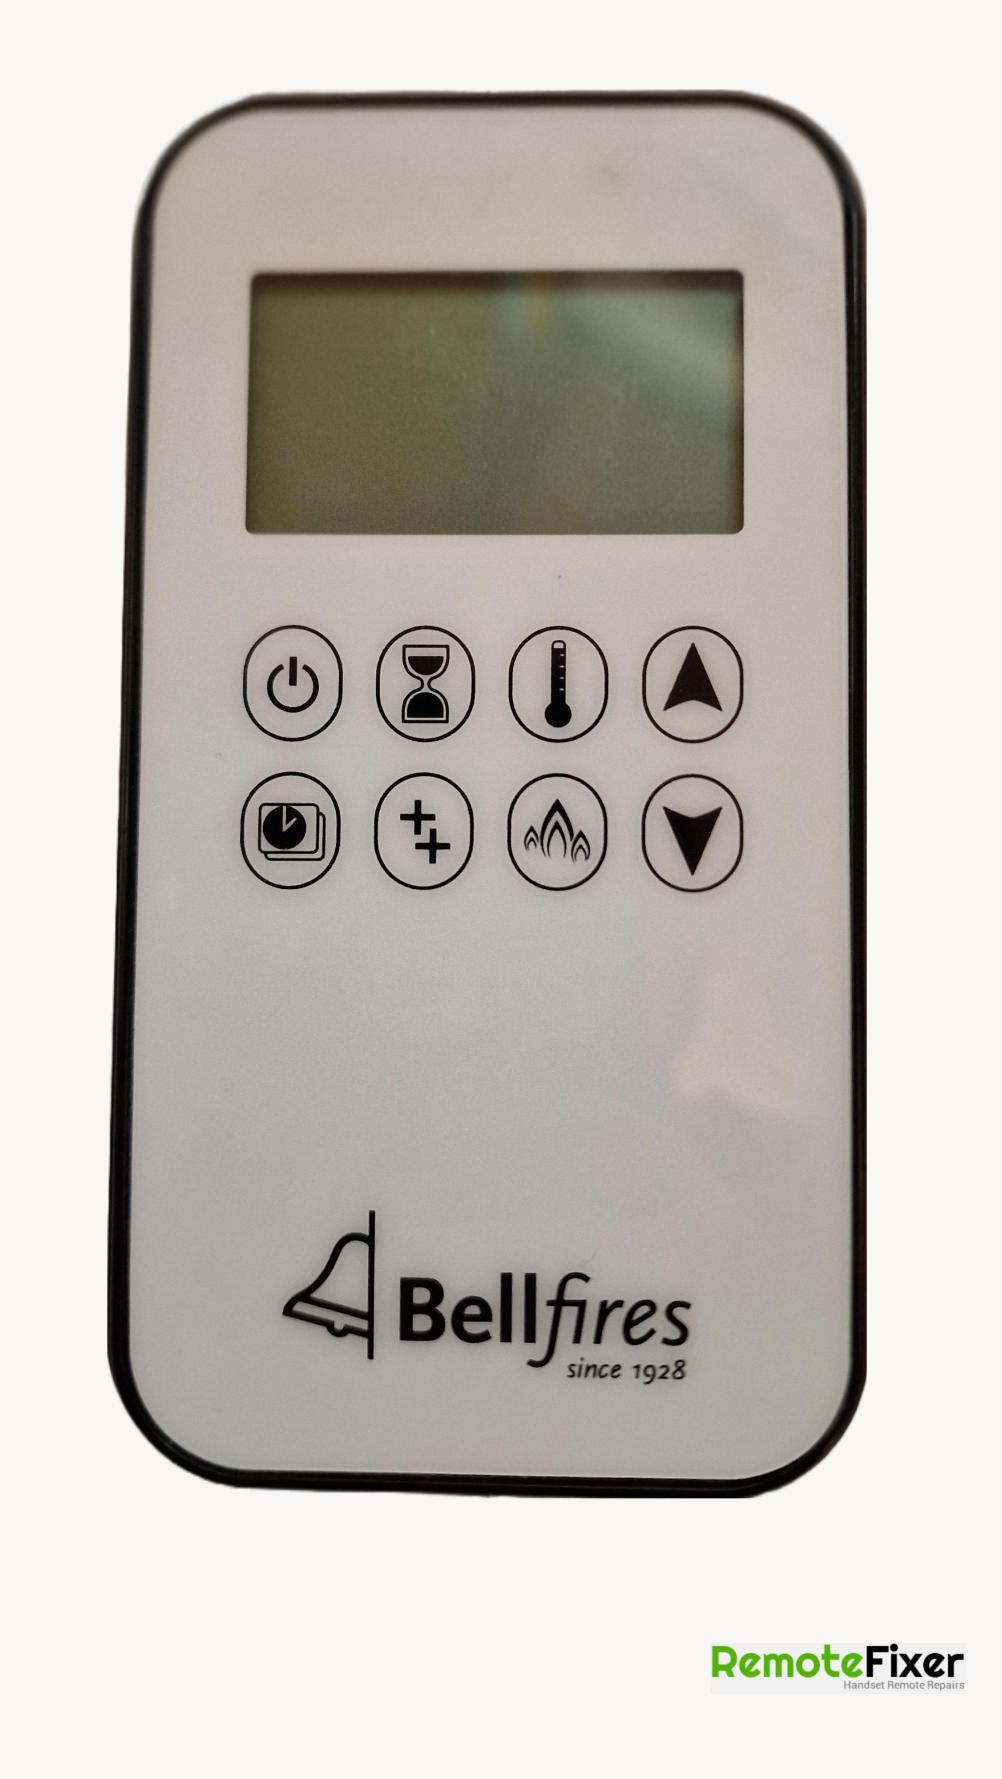 Bellfires  Remote Control - Front Image